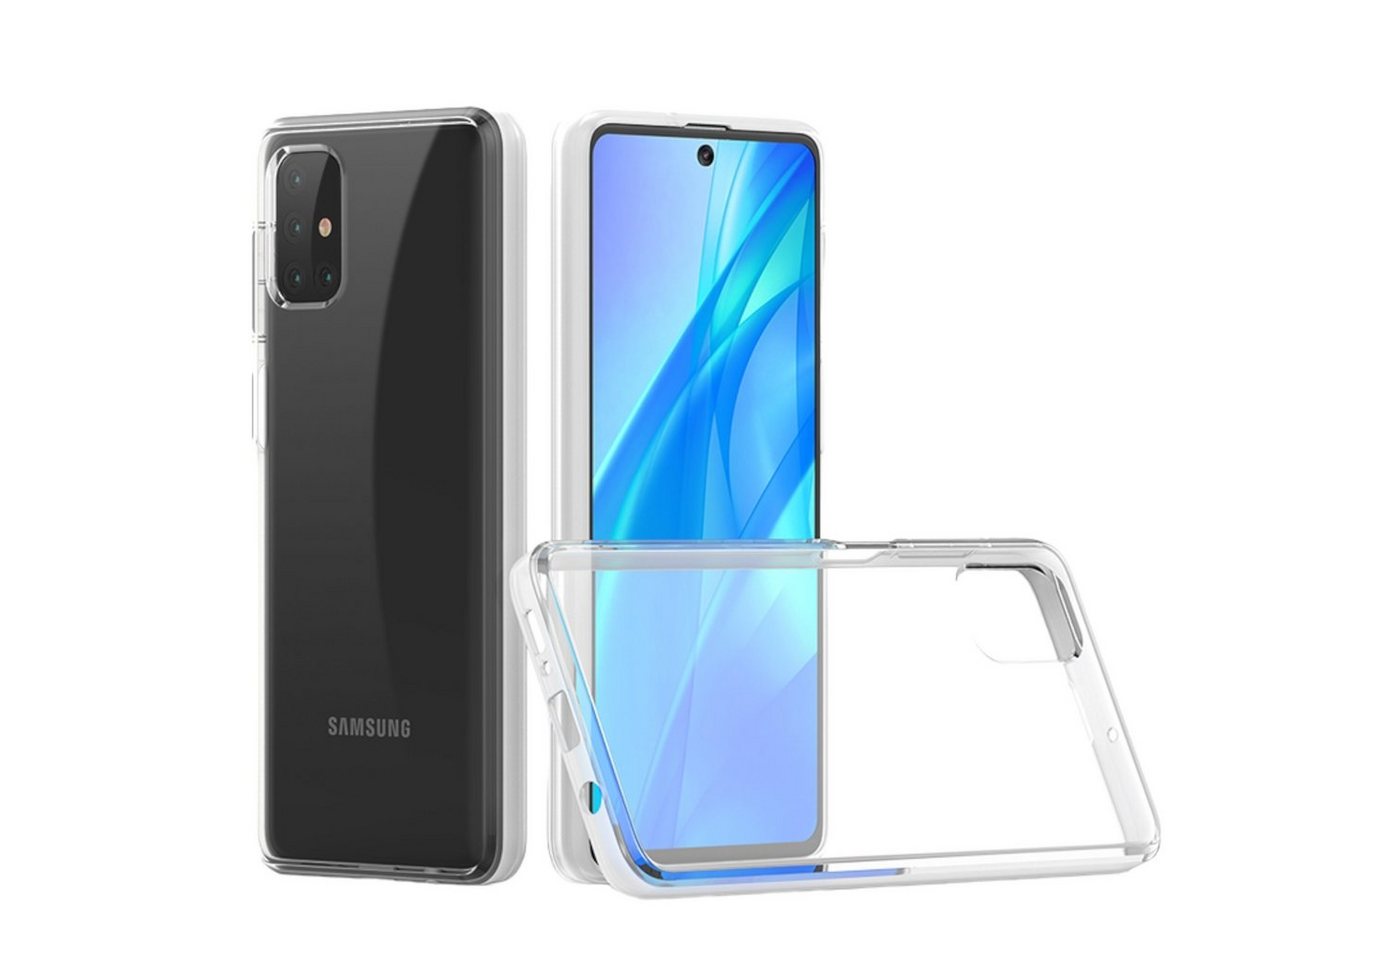 H-basics Handyhülle Samsung Galaxy A71 in Transparent Crystal Clear flexiblem TPU Silikon 16,5 cm (6,5 Zoll), Transparent von H-basics